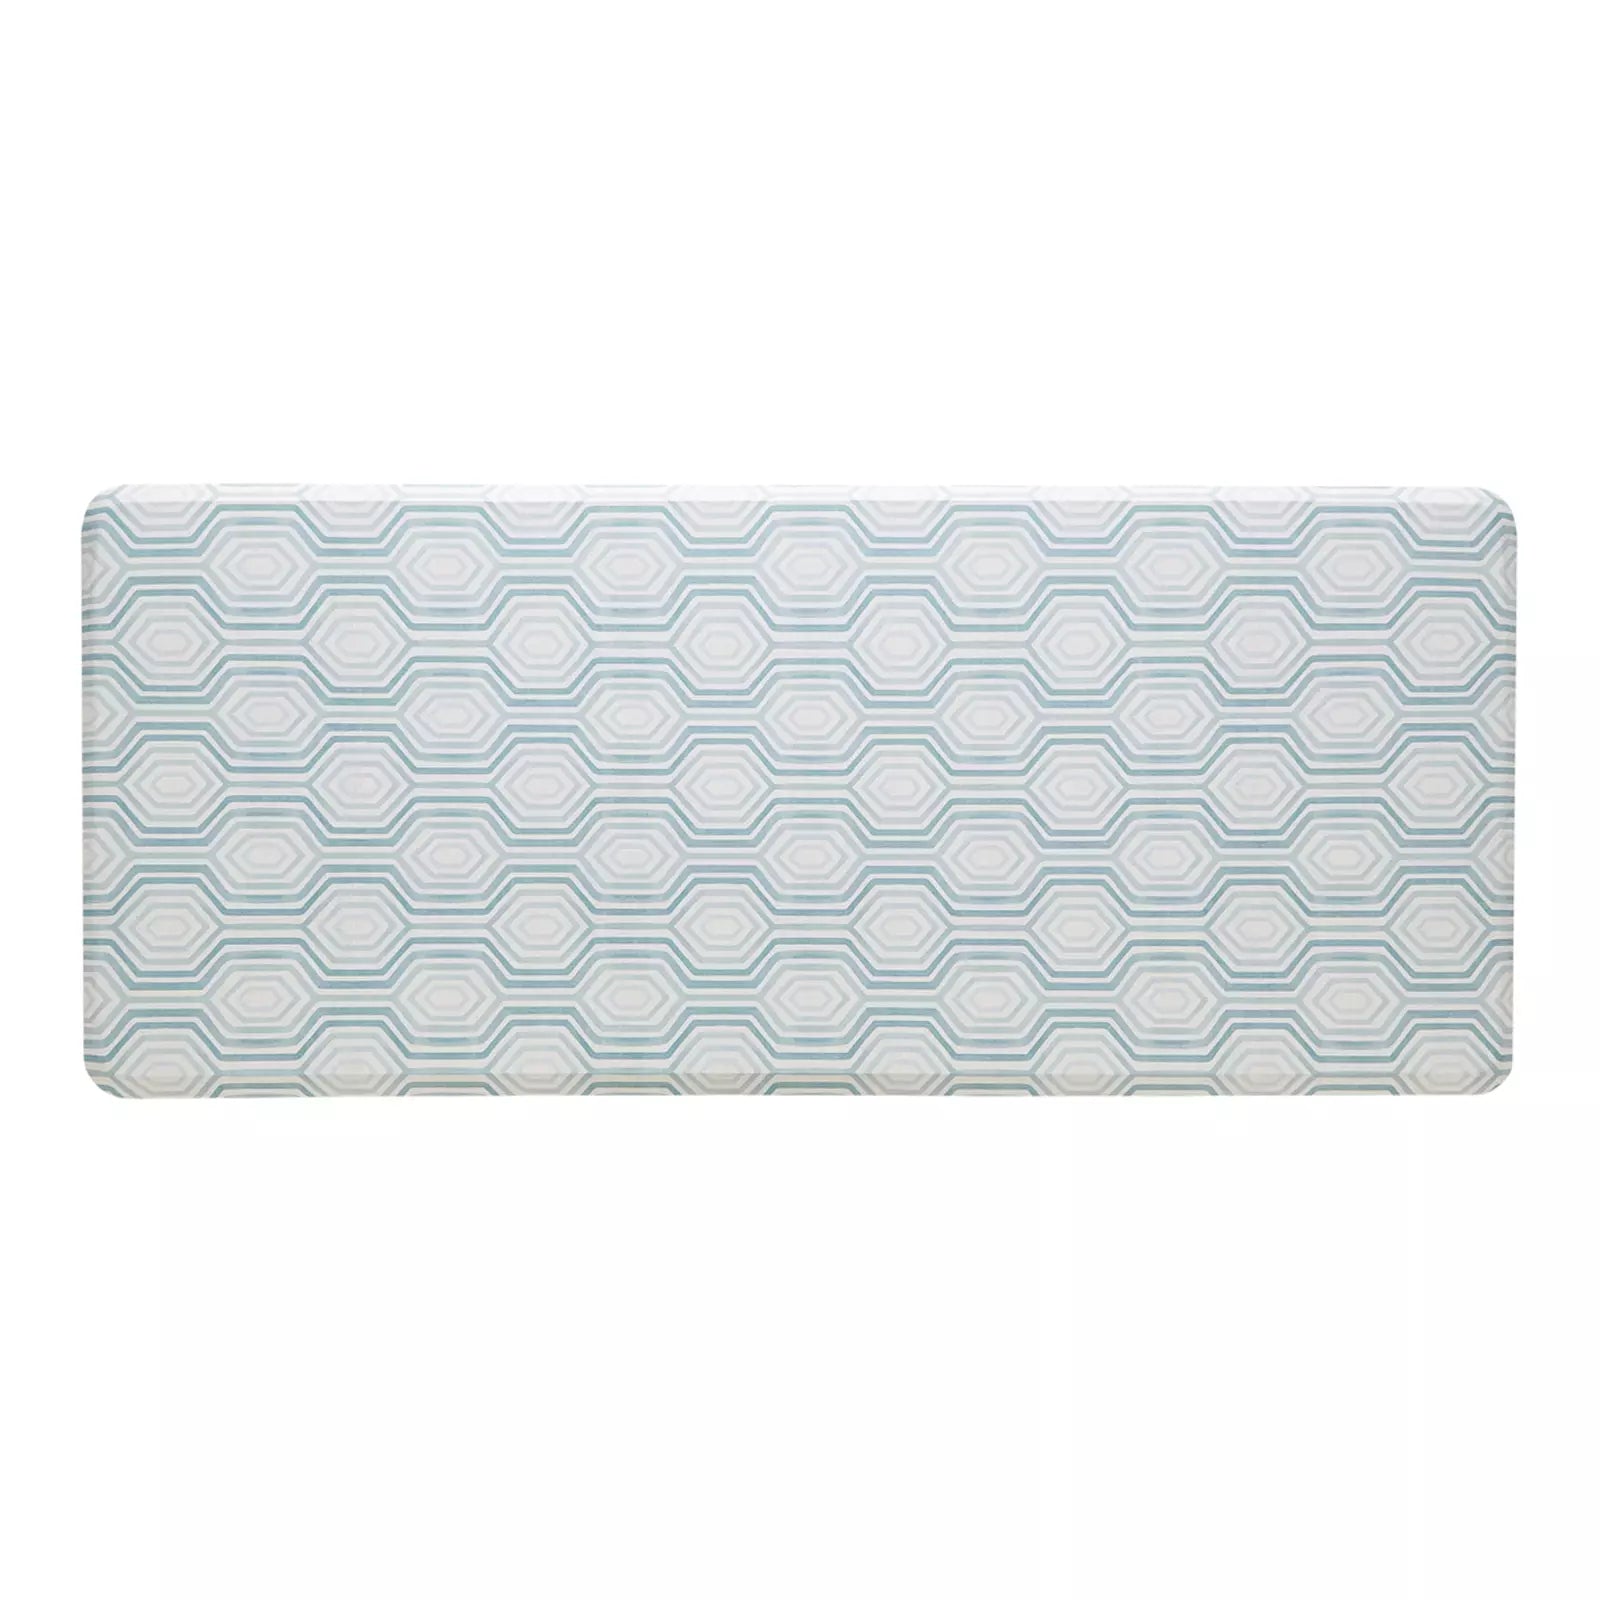 Blake waves blue and white mod preppy geometric print kitchen mat shown in size 30x72